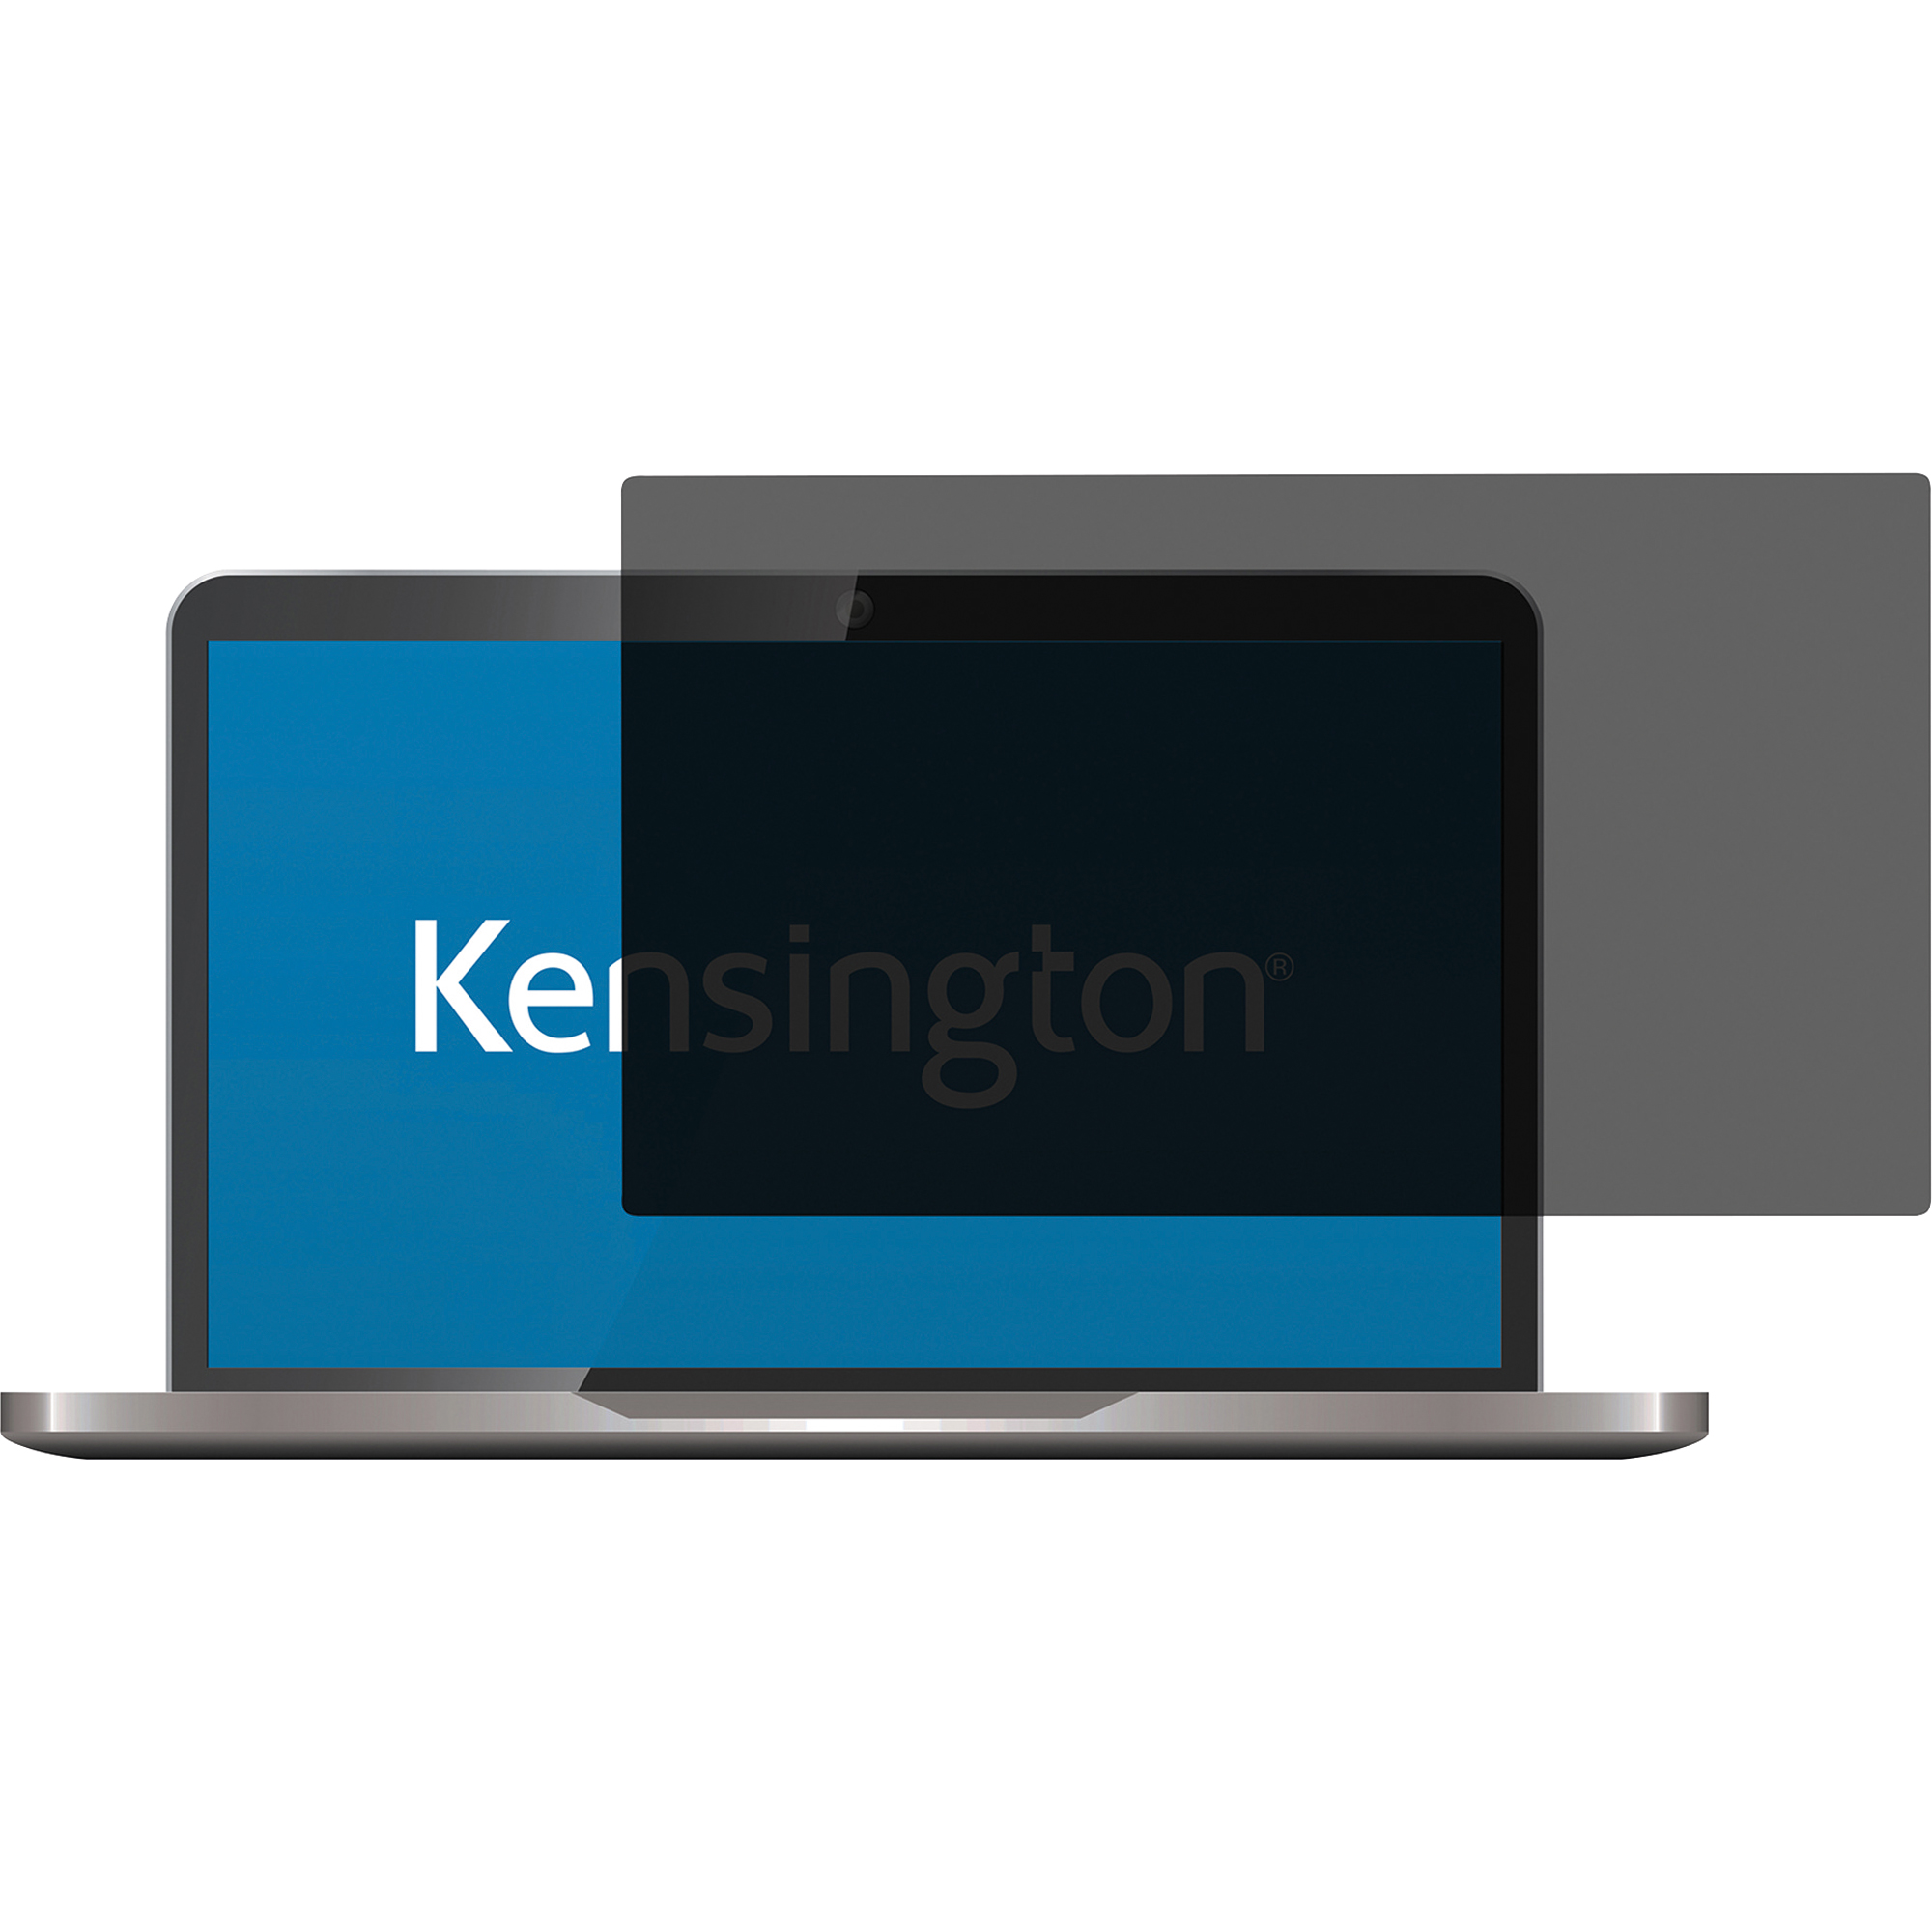 Kensington Bildschirmfilter für Laptops 15,6 Zoll